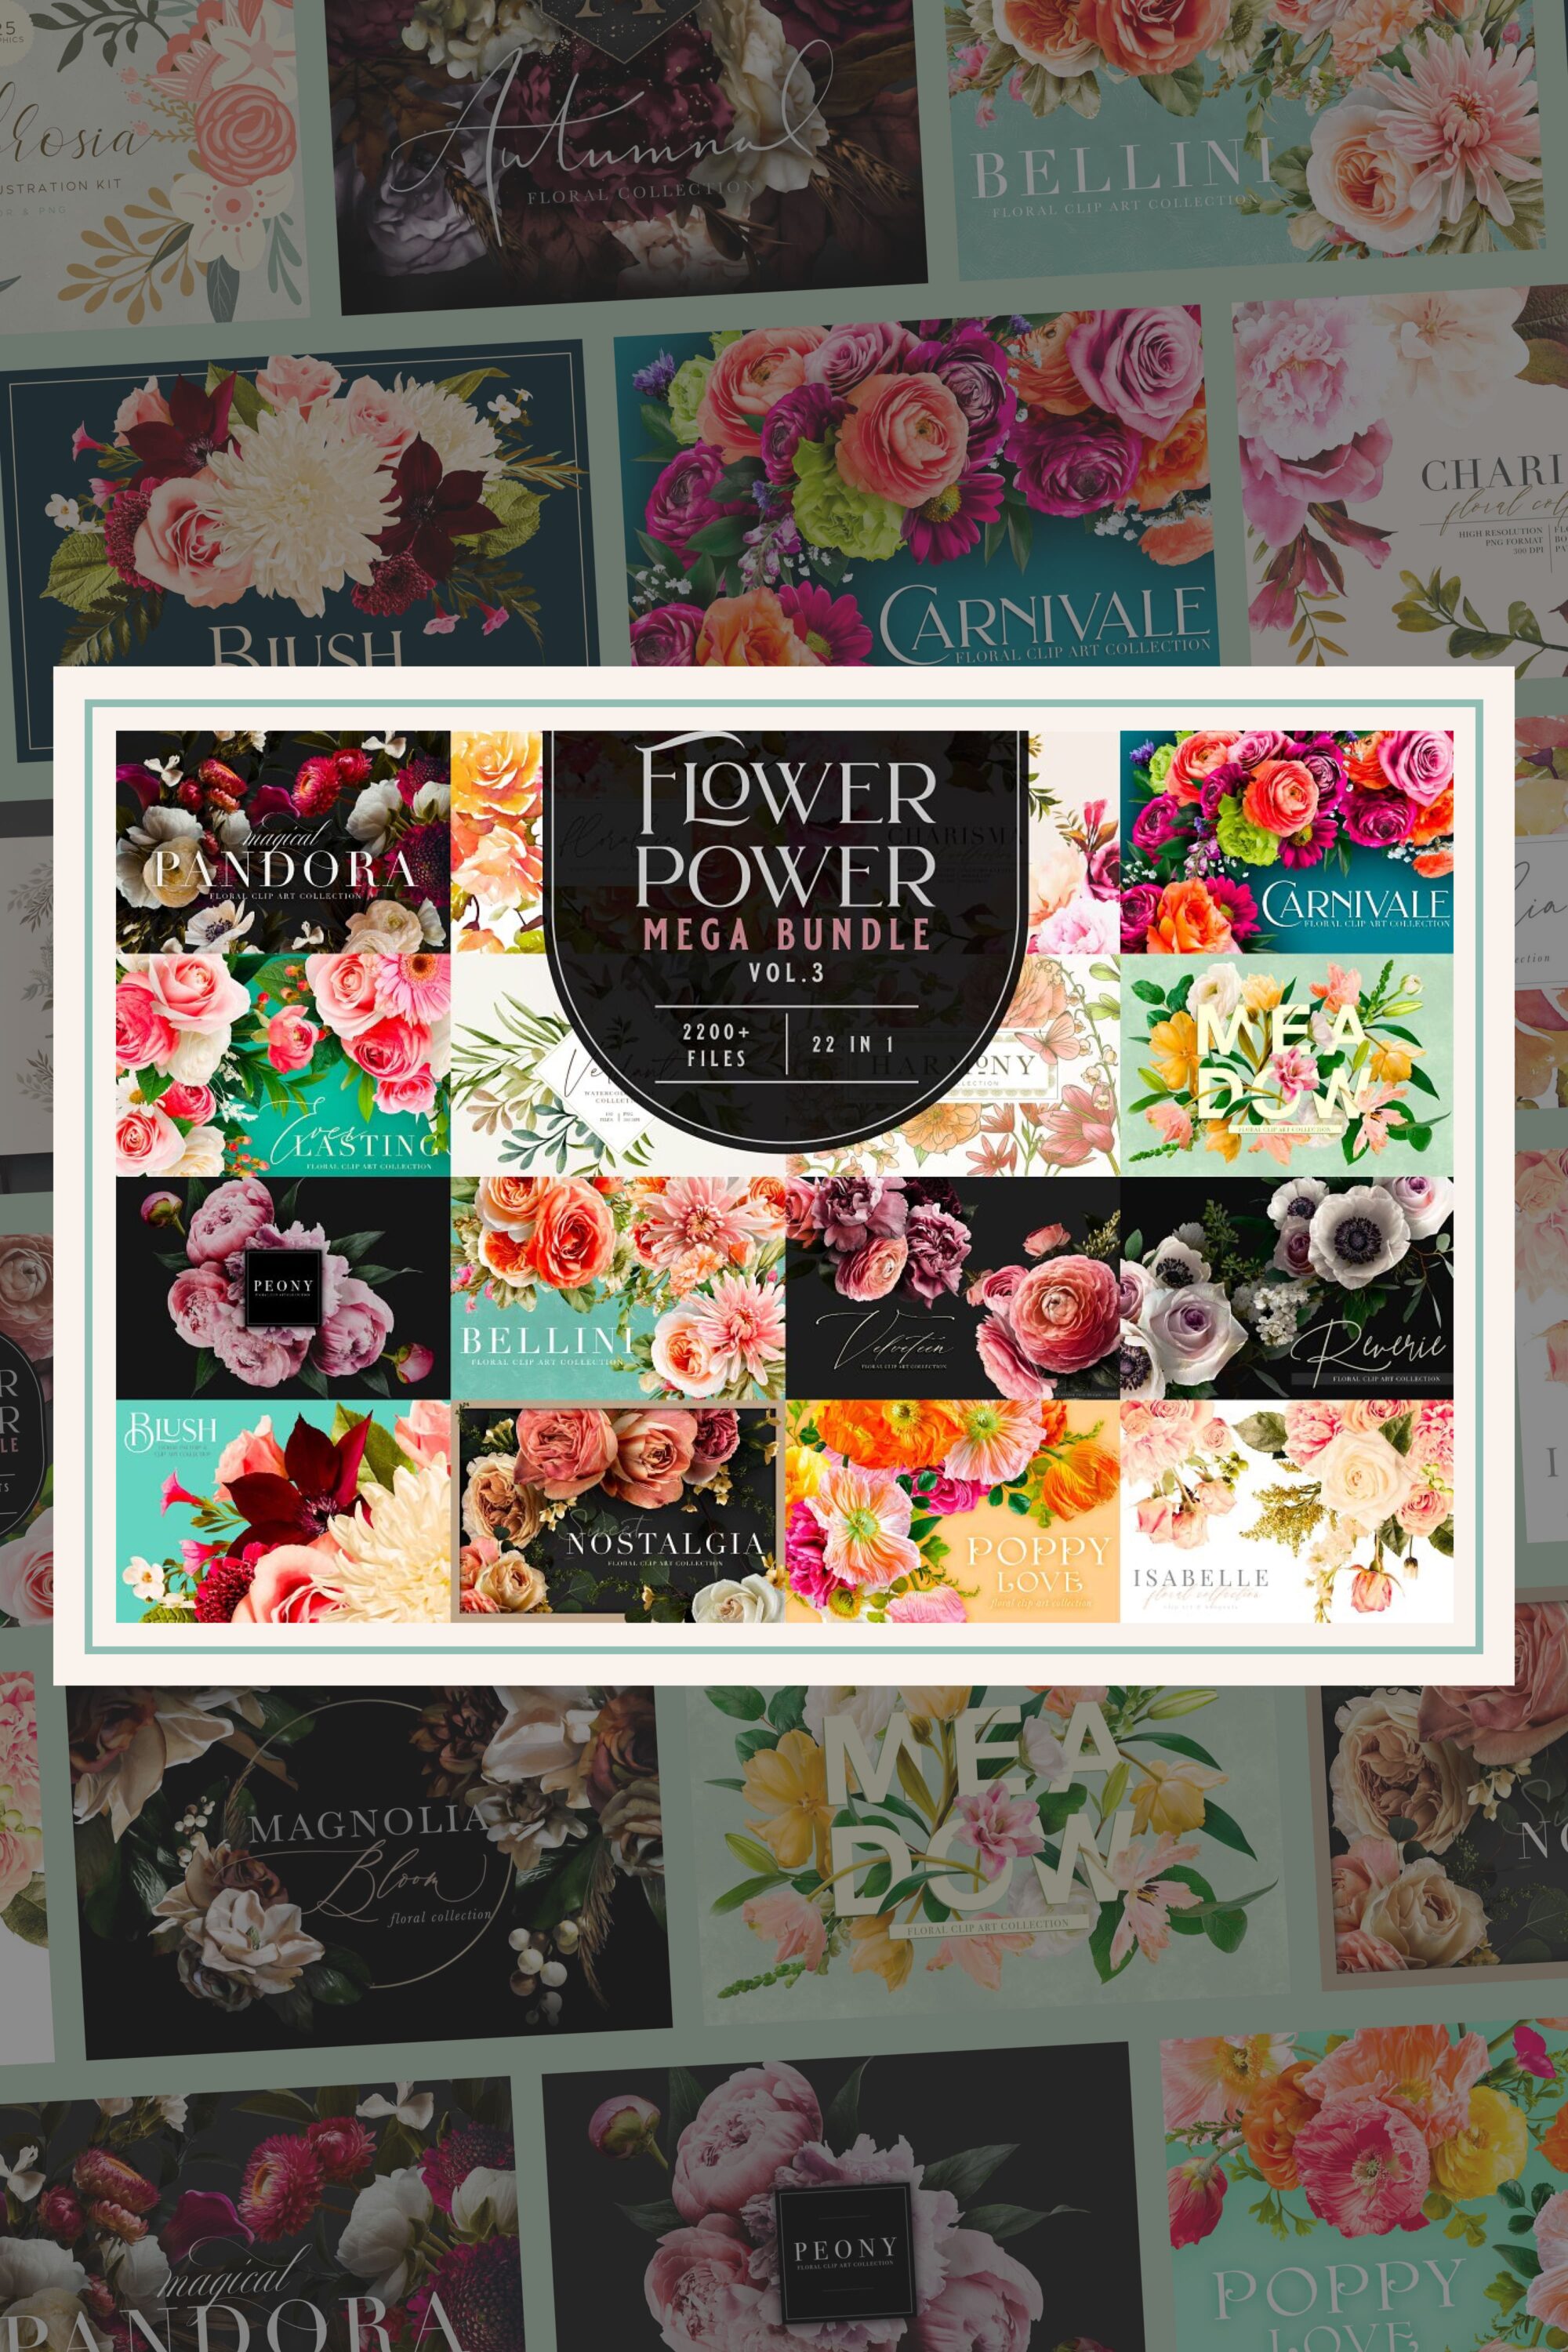 Flower Power Mega Bundle Vol 3 pinterest image.